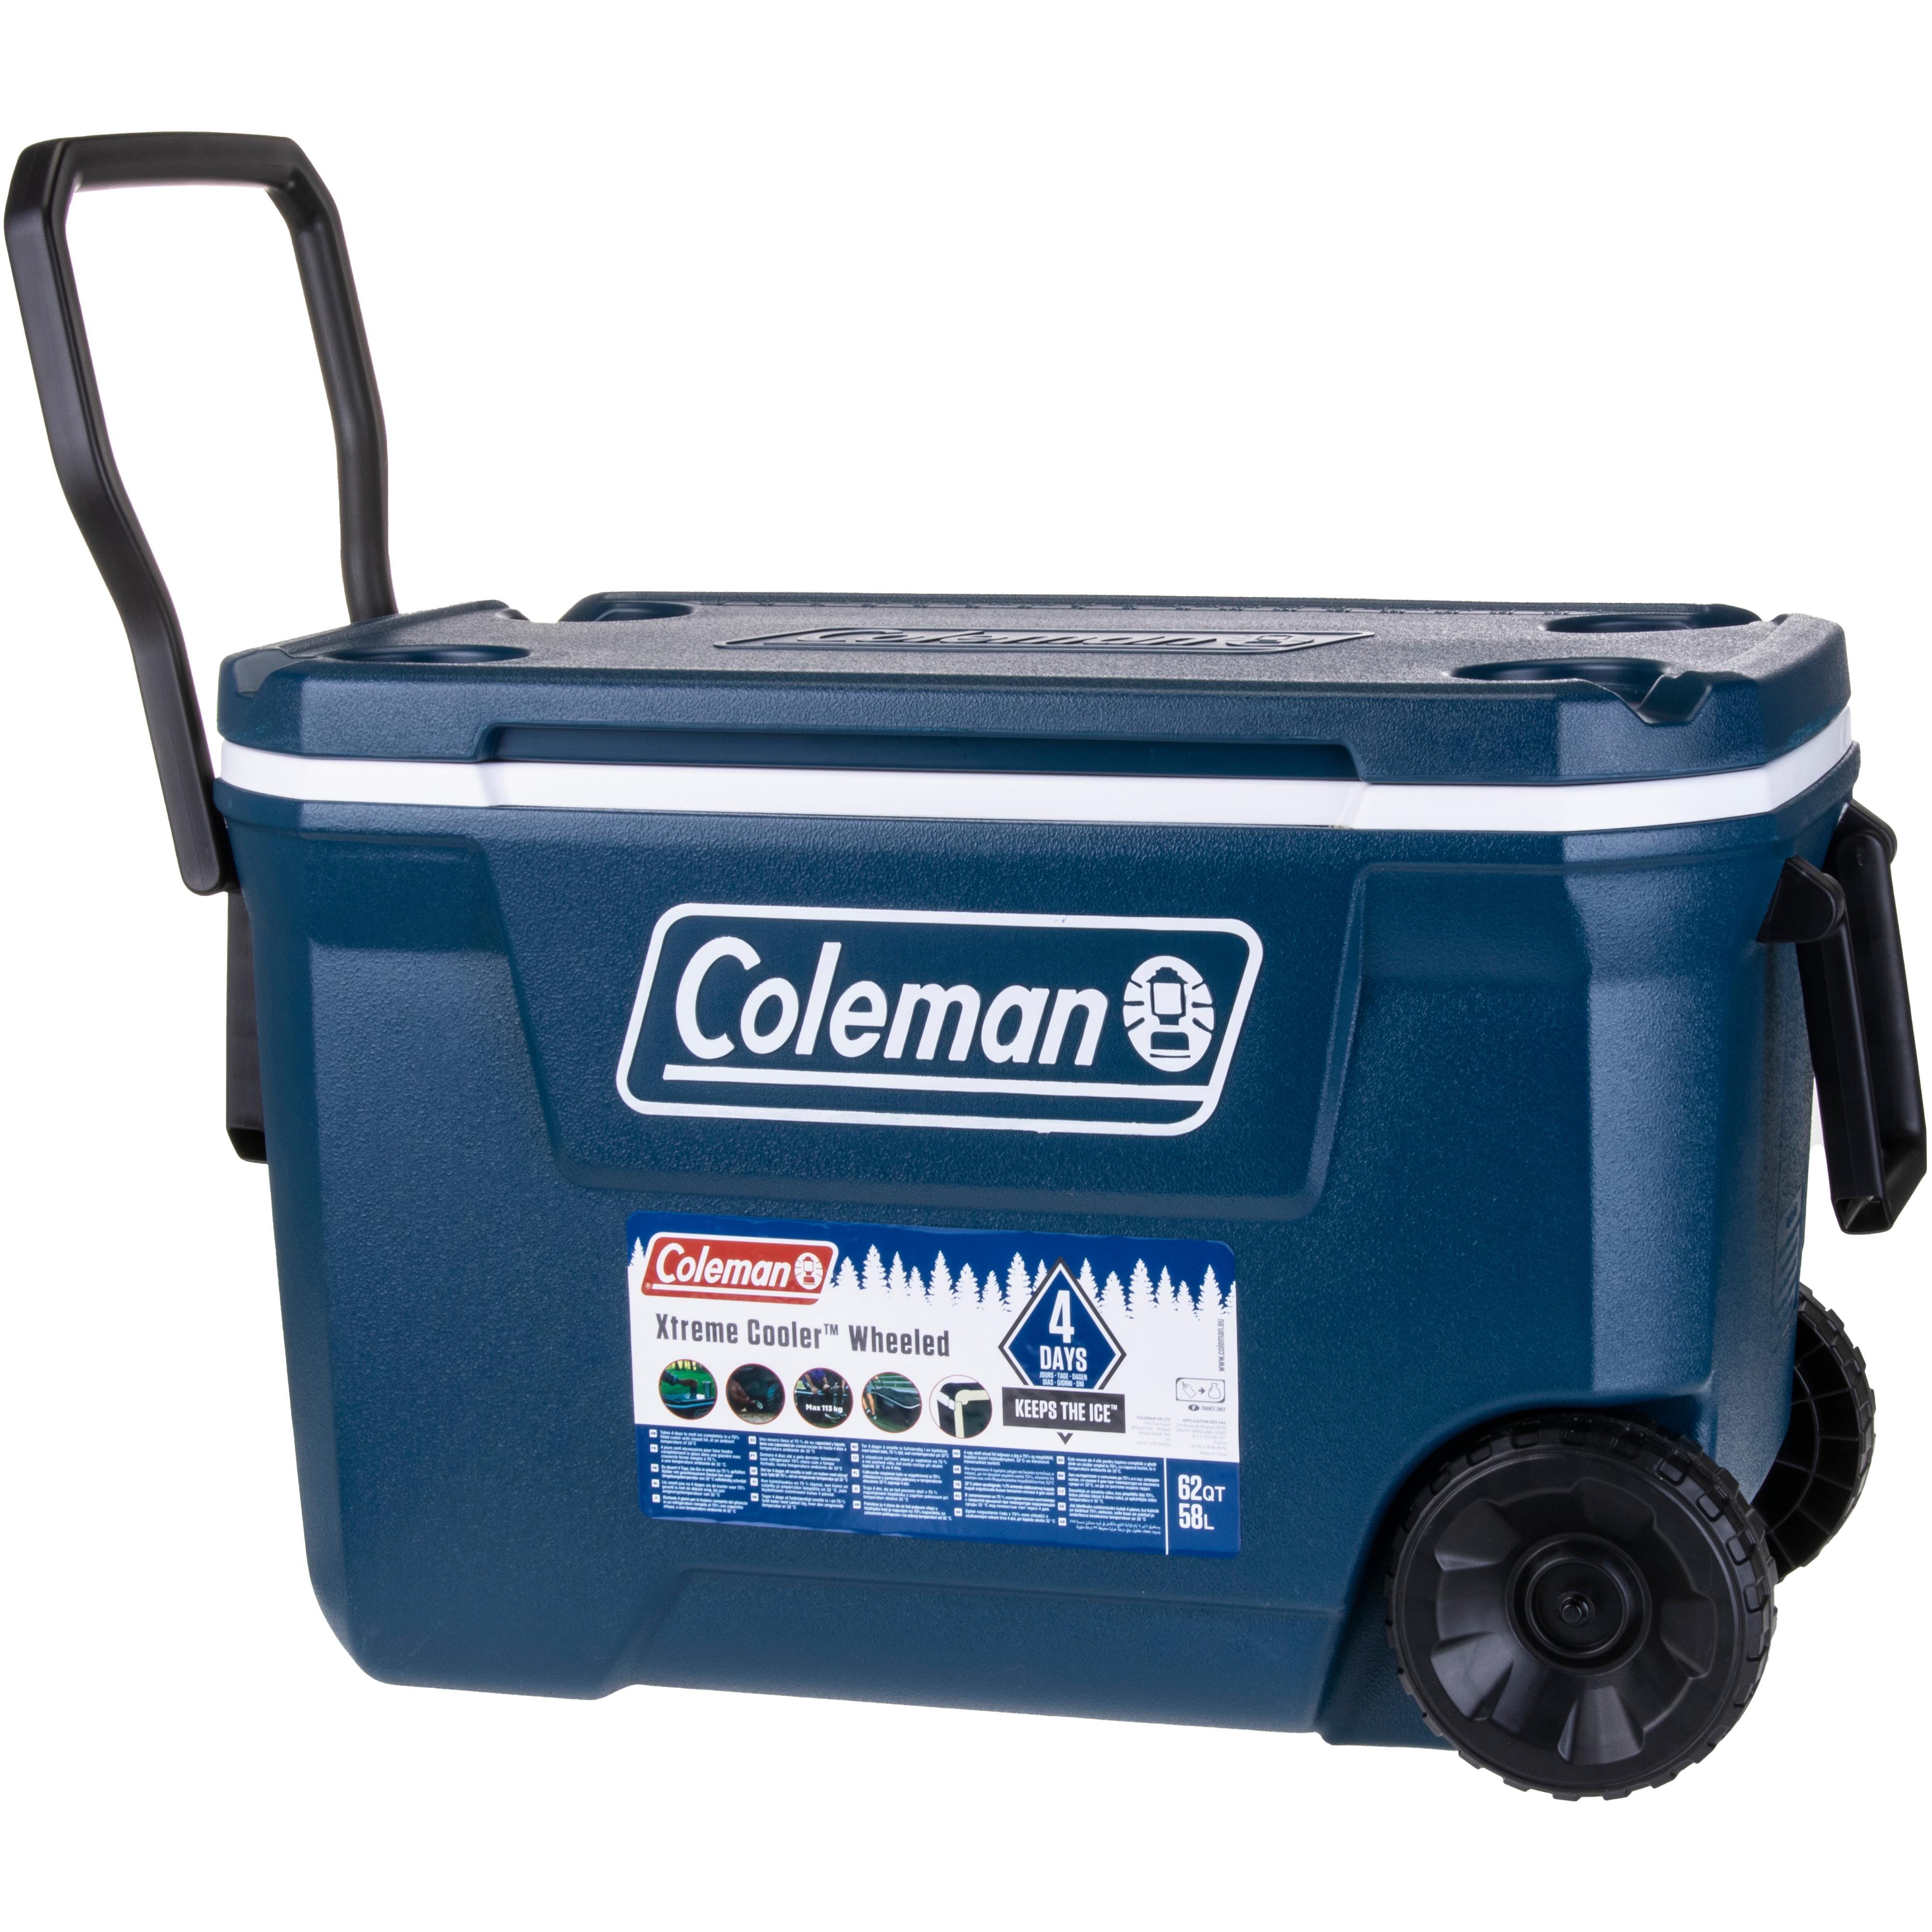 Kühlbox Coleman Xtreme 62QT Wheeled Cooler bestellen